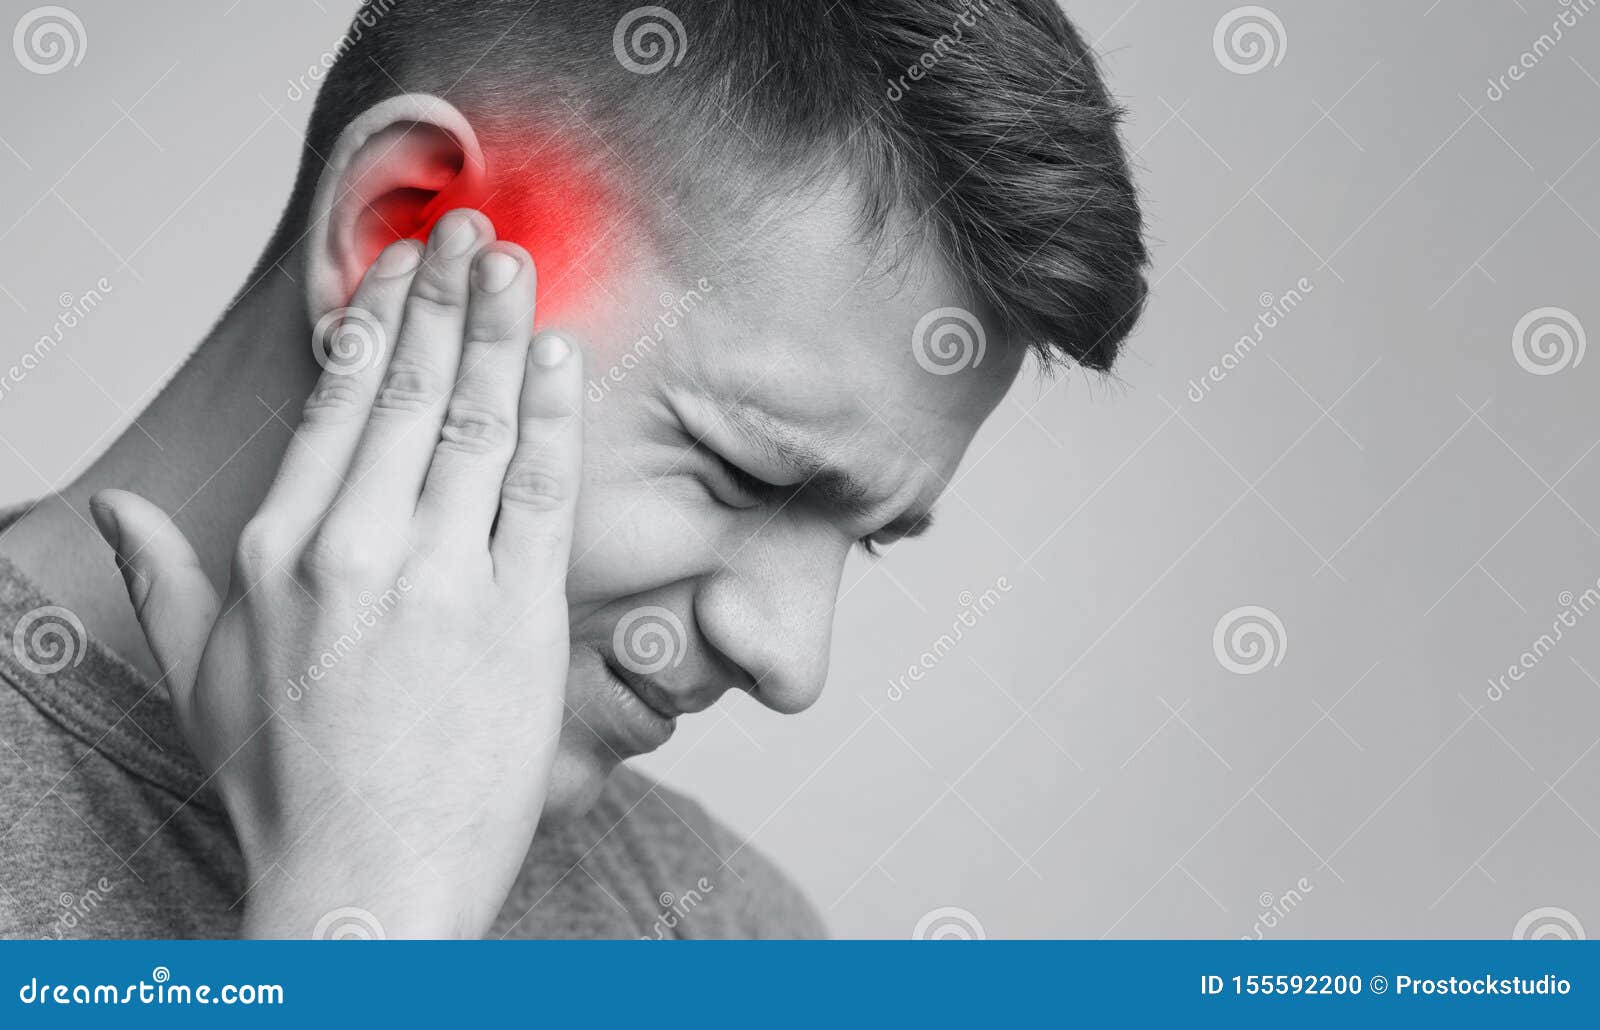 sick man having ear pain, touching his painful head